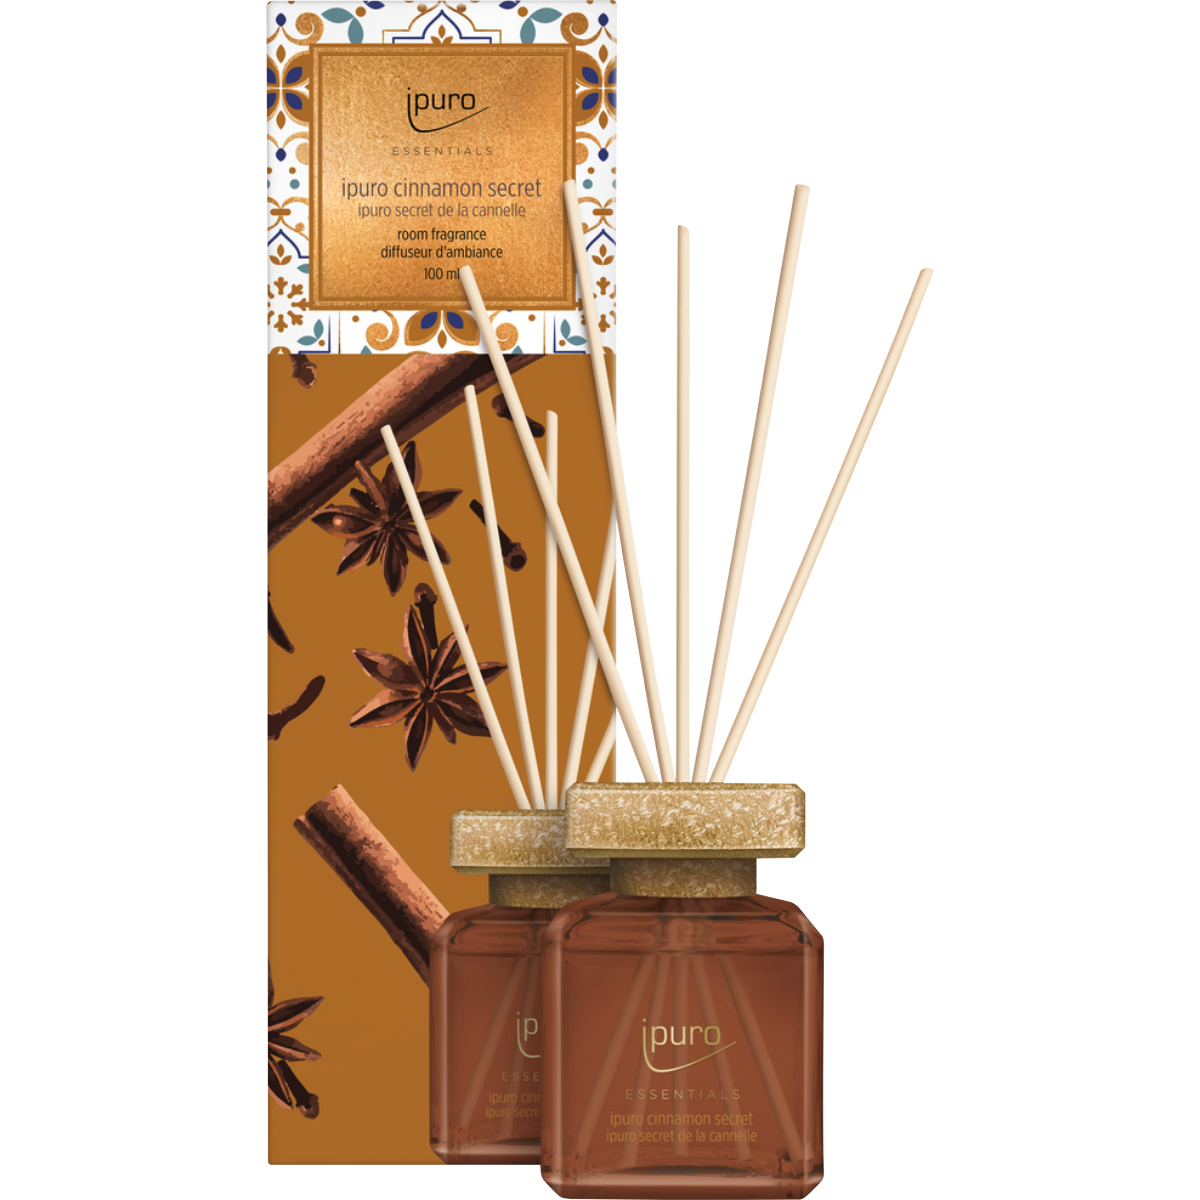 ipuro Room Fragrance Cinnamon secret, 100ml - Buy online now